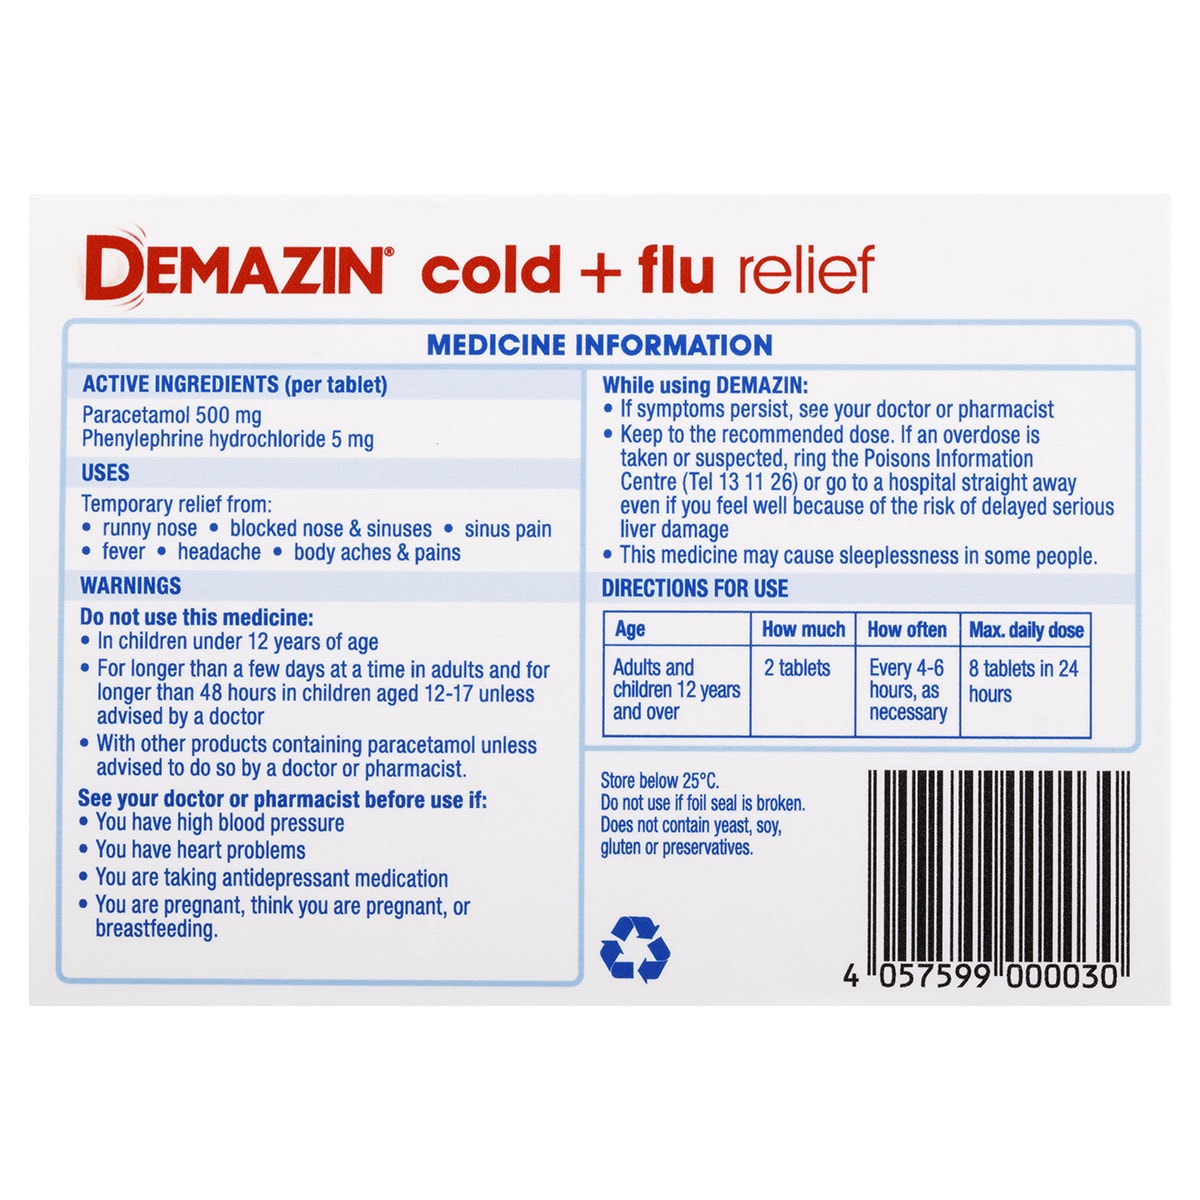 Demazin PE Multi-Action Cold & Flu Relief 24 Tablets